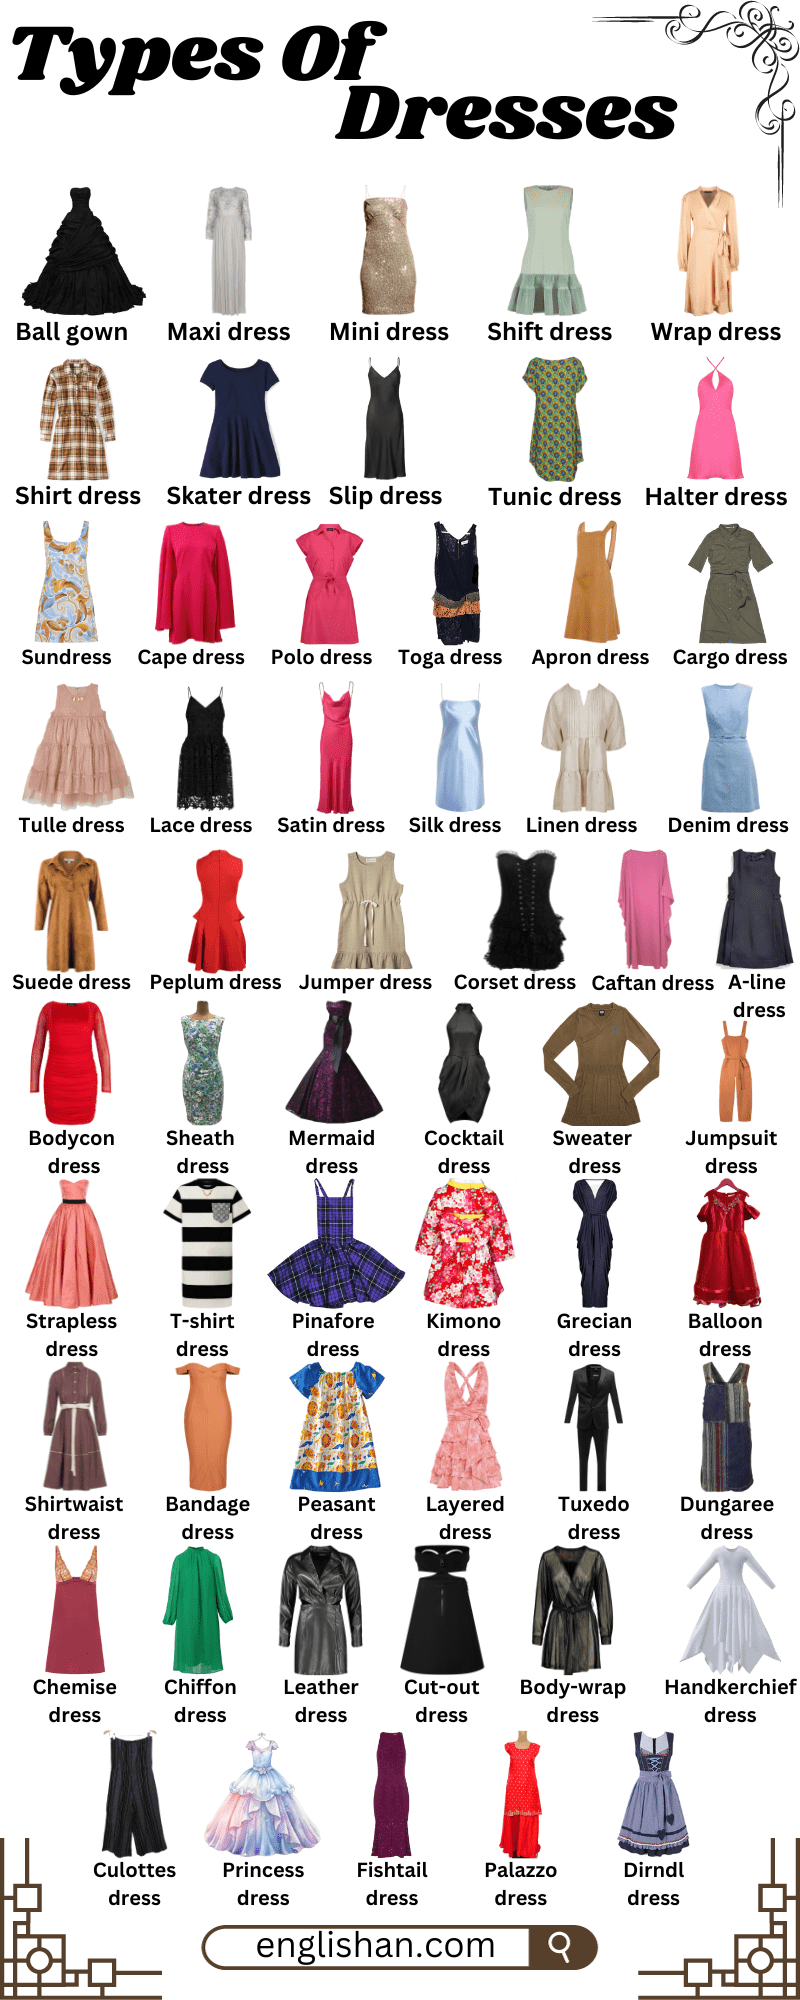 Types Of Dresses 1